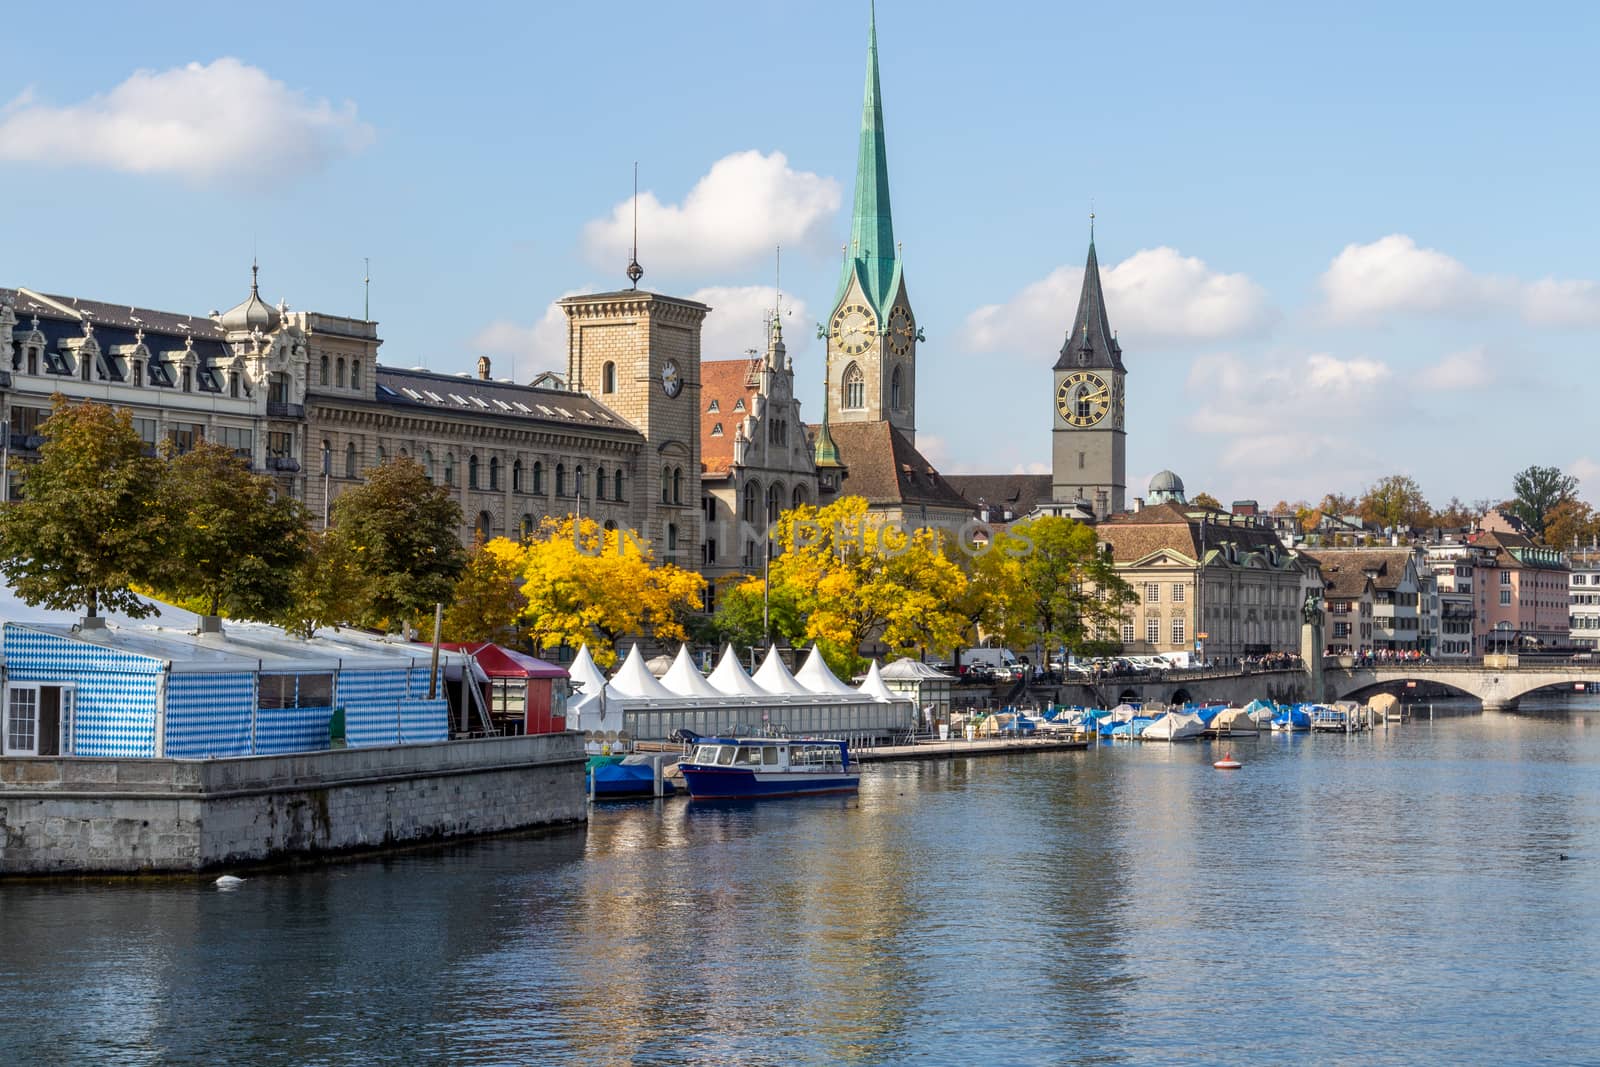 Waterfront of Limmat river in Zurich, Switzerland with ships, ch by reinerc